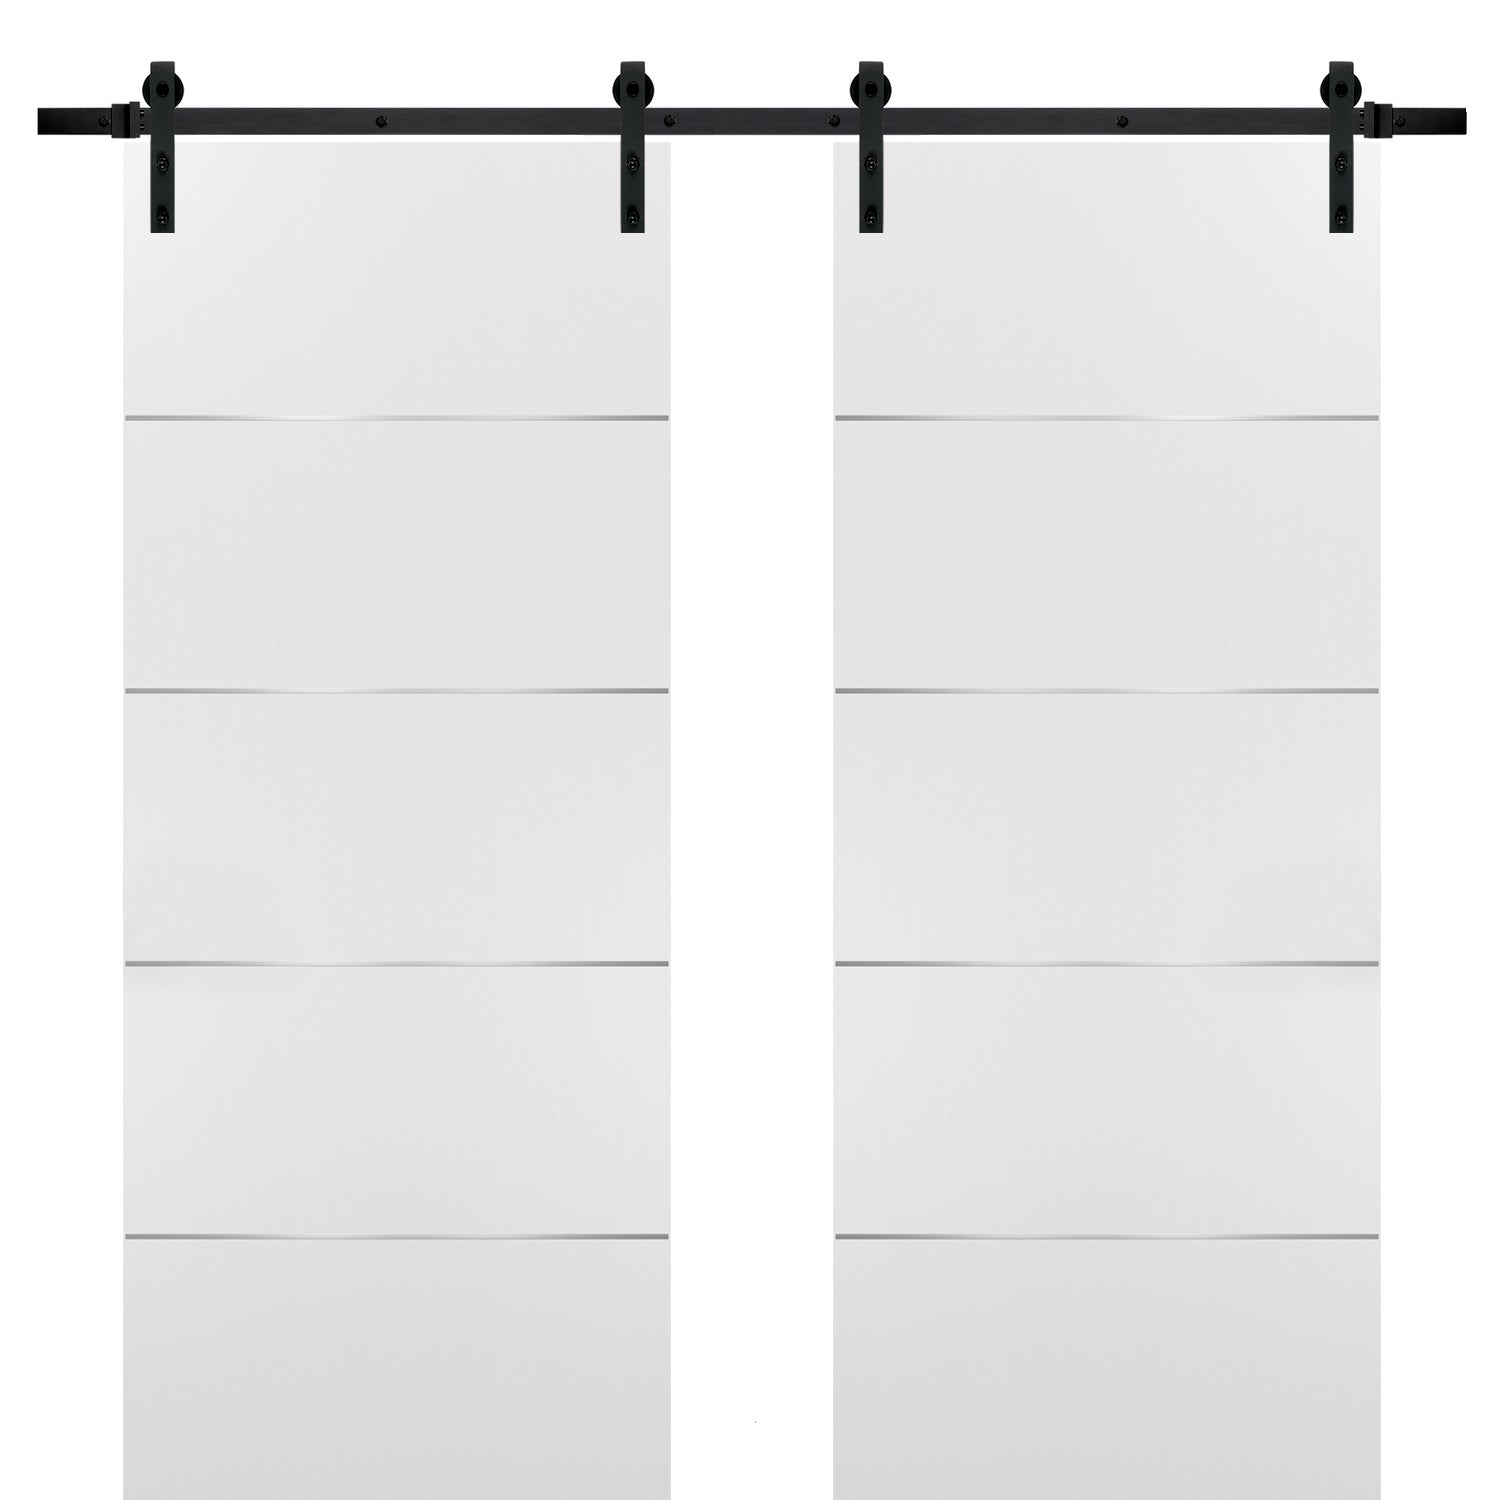 SARTODOORS Double Barn Sliding White Doors 72x80 with Black Hardware | Planum 0020 Matte White | Rails 13FT Steel | Wood Doors